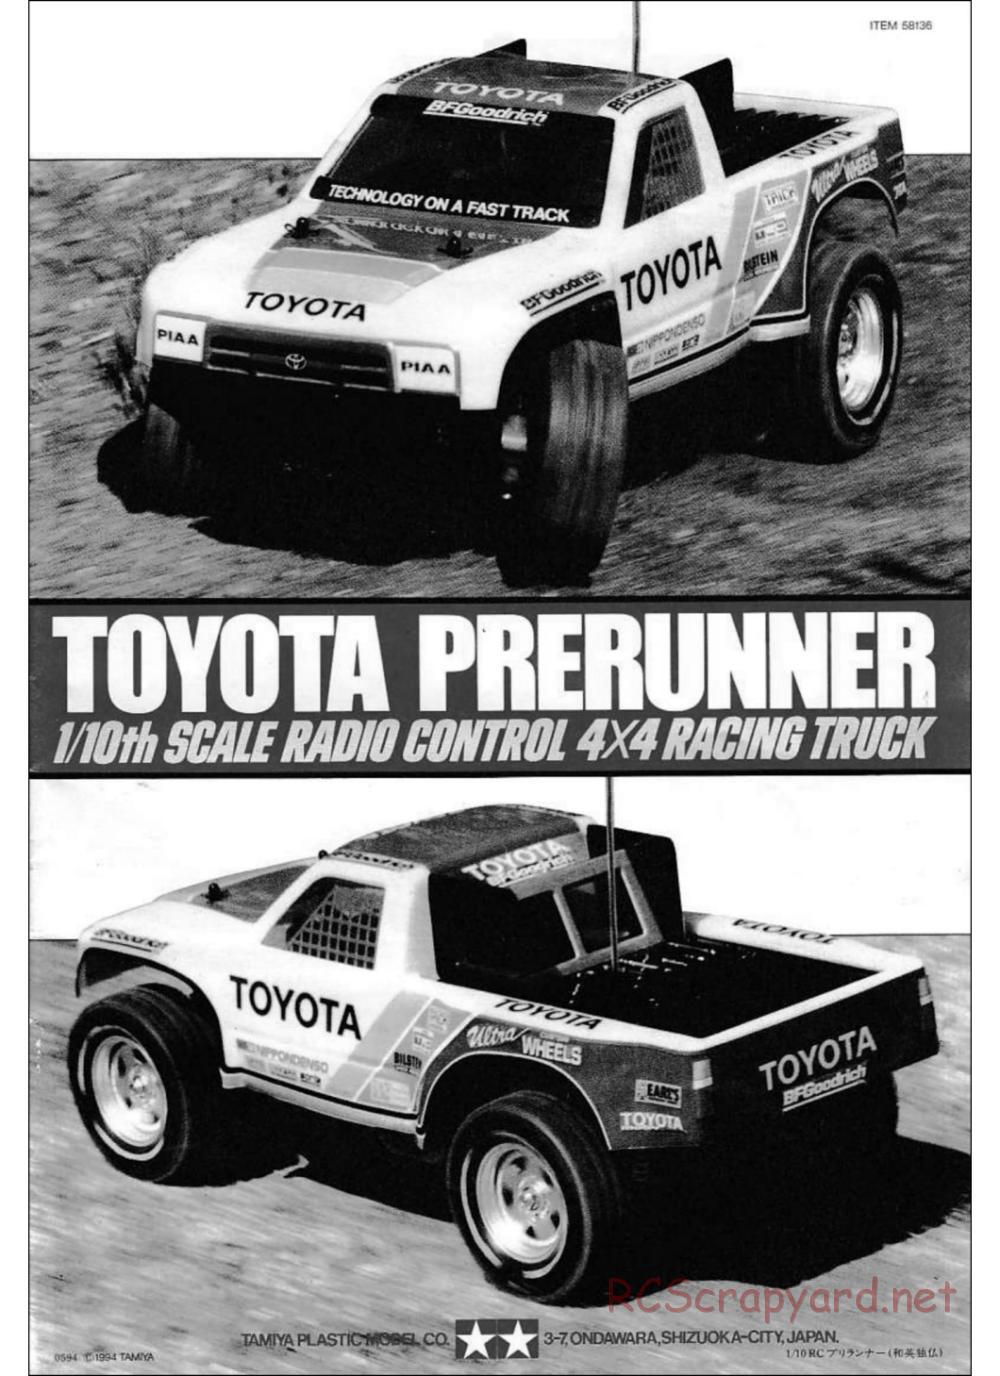 Tamiya - Toyota Prerunner Chassis - Manual - Page 1